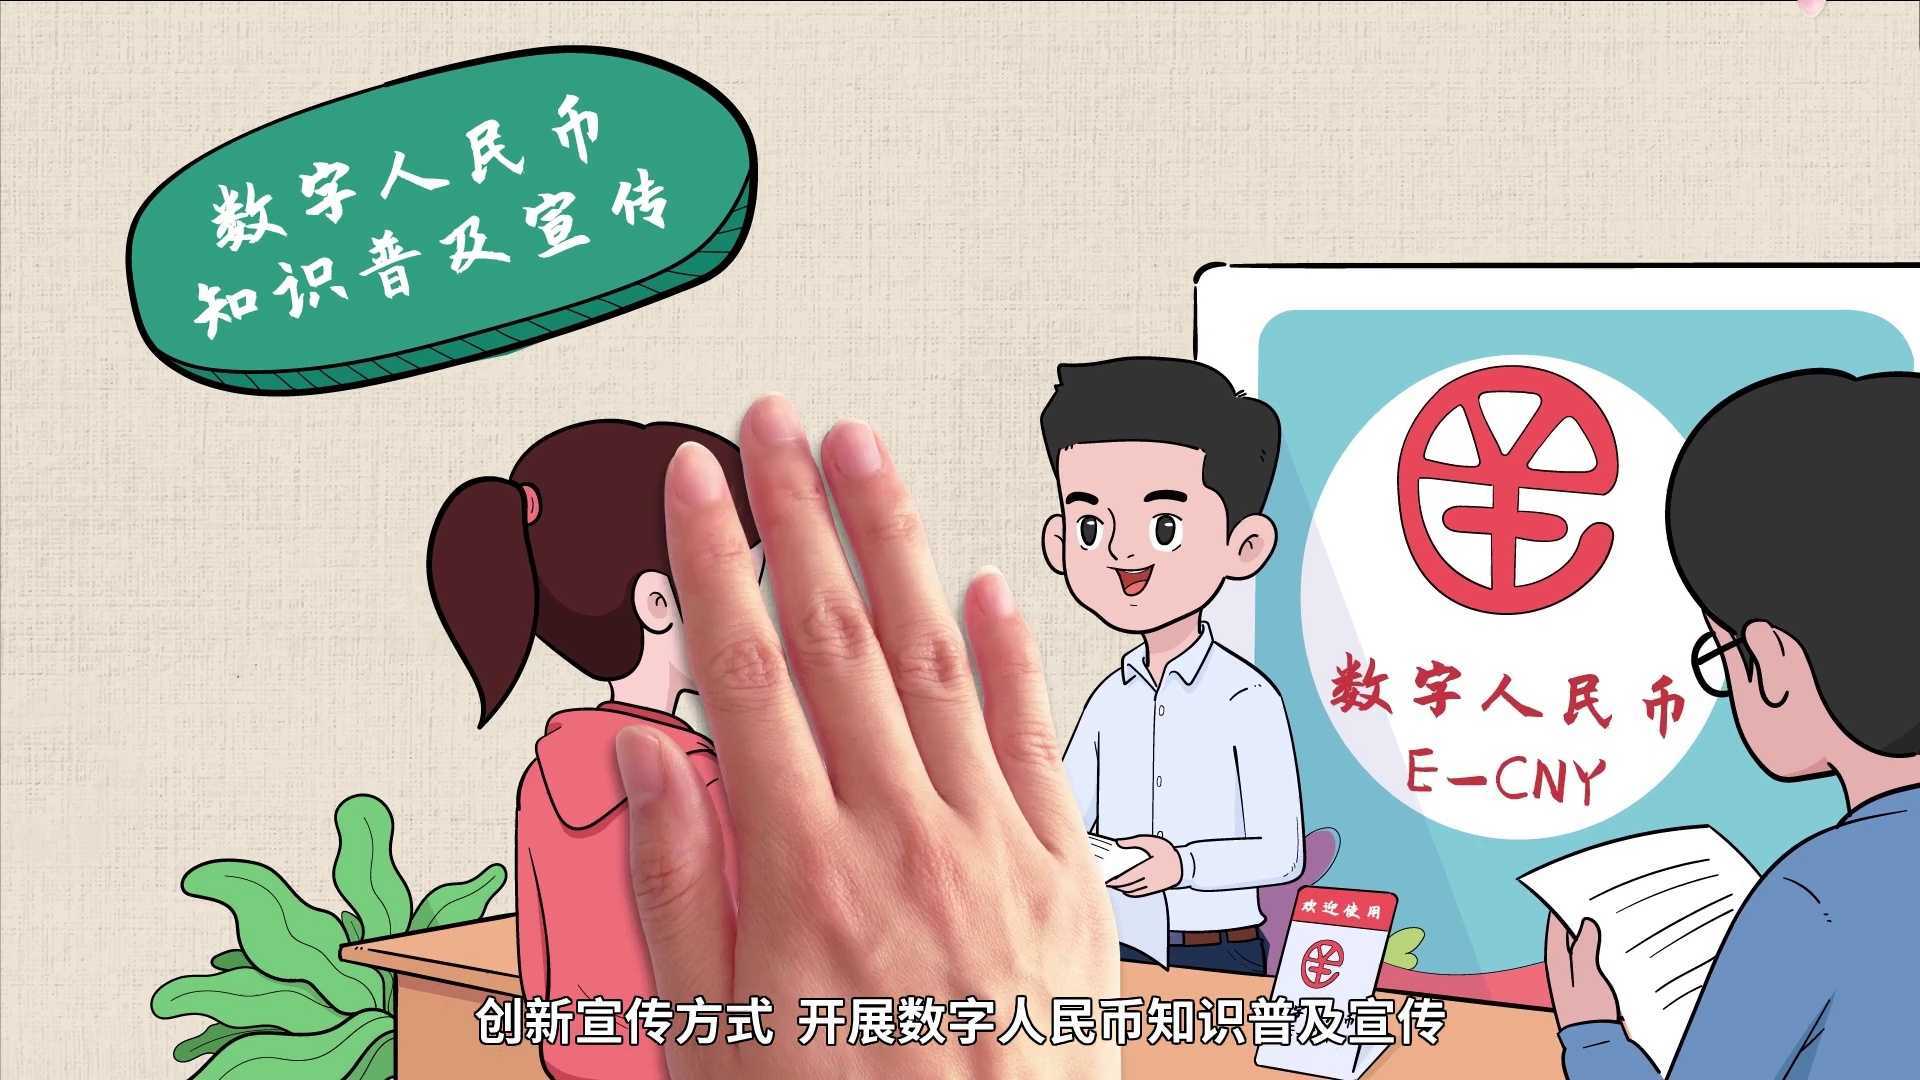 【MG动画】高水平建设北京城市副中心法定数字货币试验区